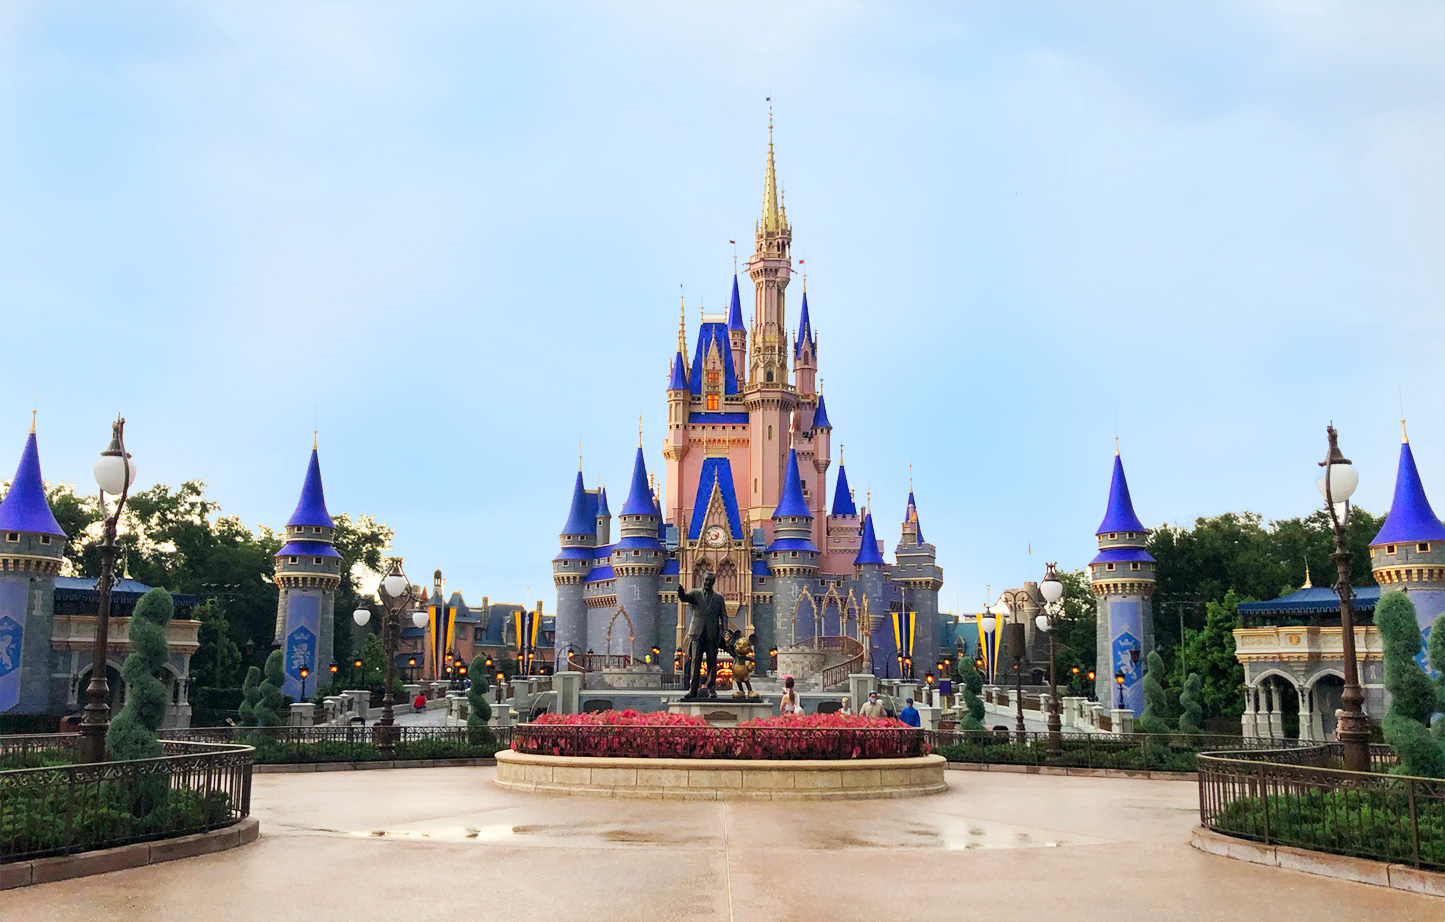 Cinderella Castle at Disney's Magic Kingdom